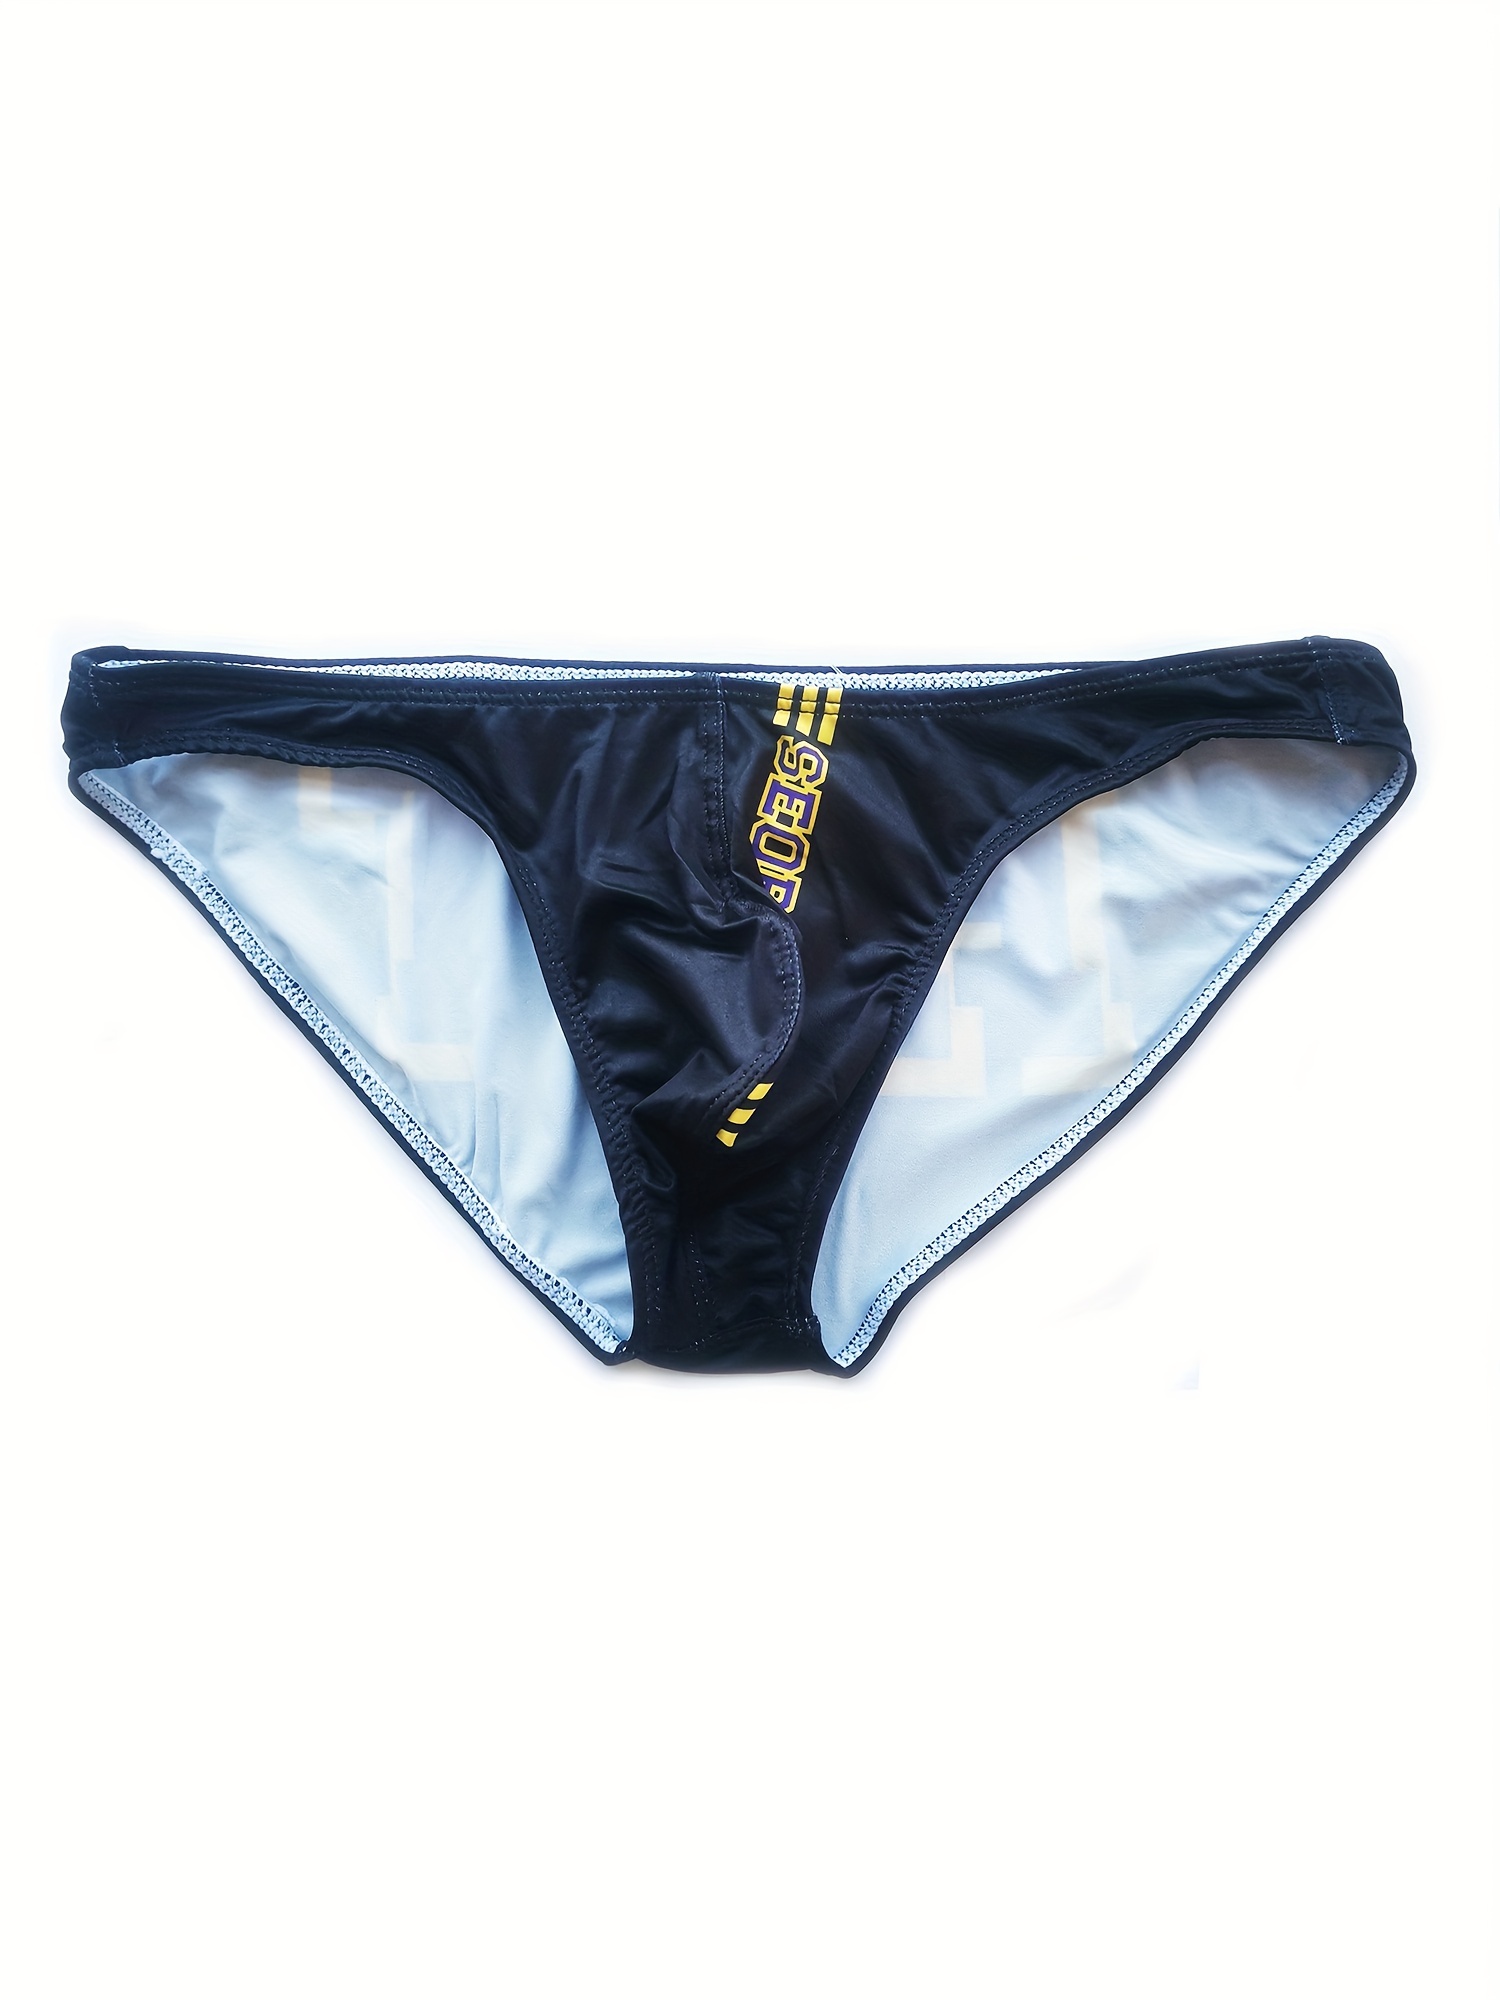 Men Seamless Low Waist Briefs Thin Underpants Underwear Panties Knickers